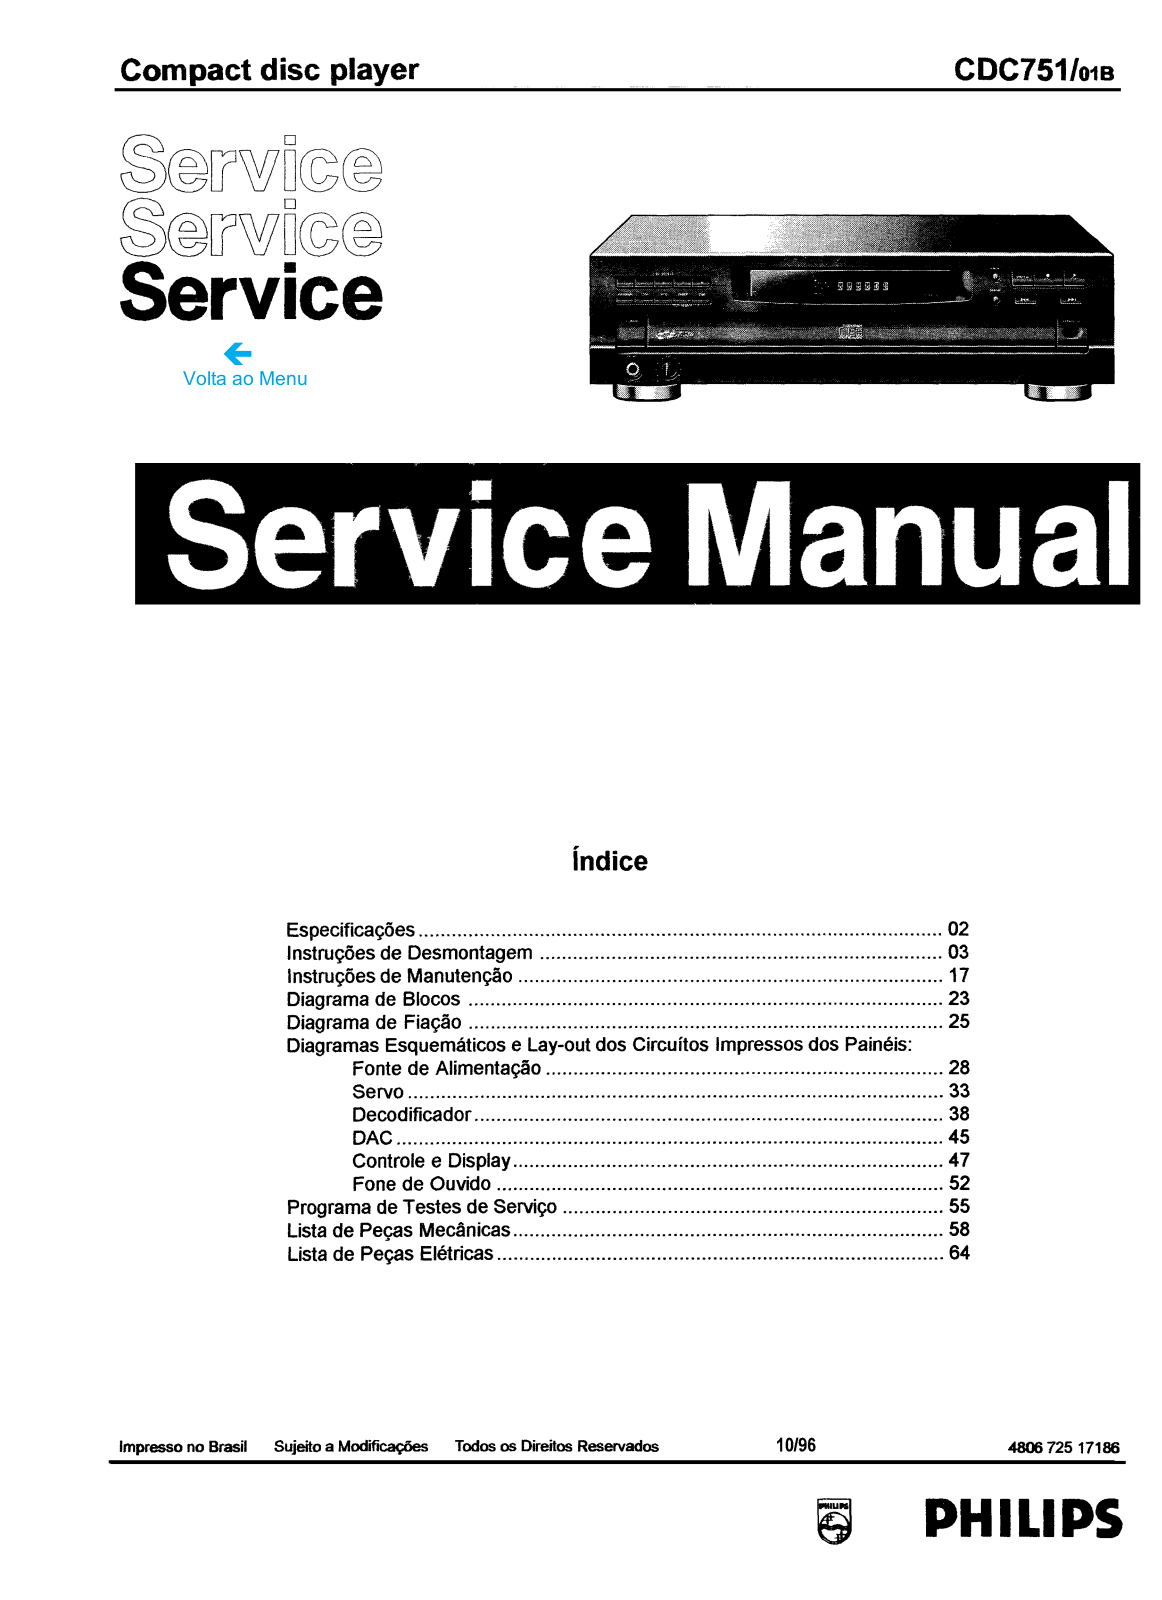 Philips CDC-751 Service manual